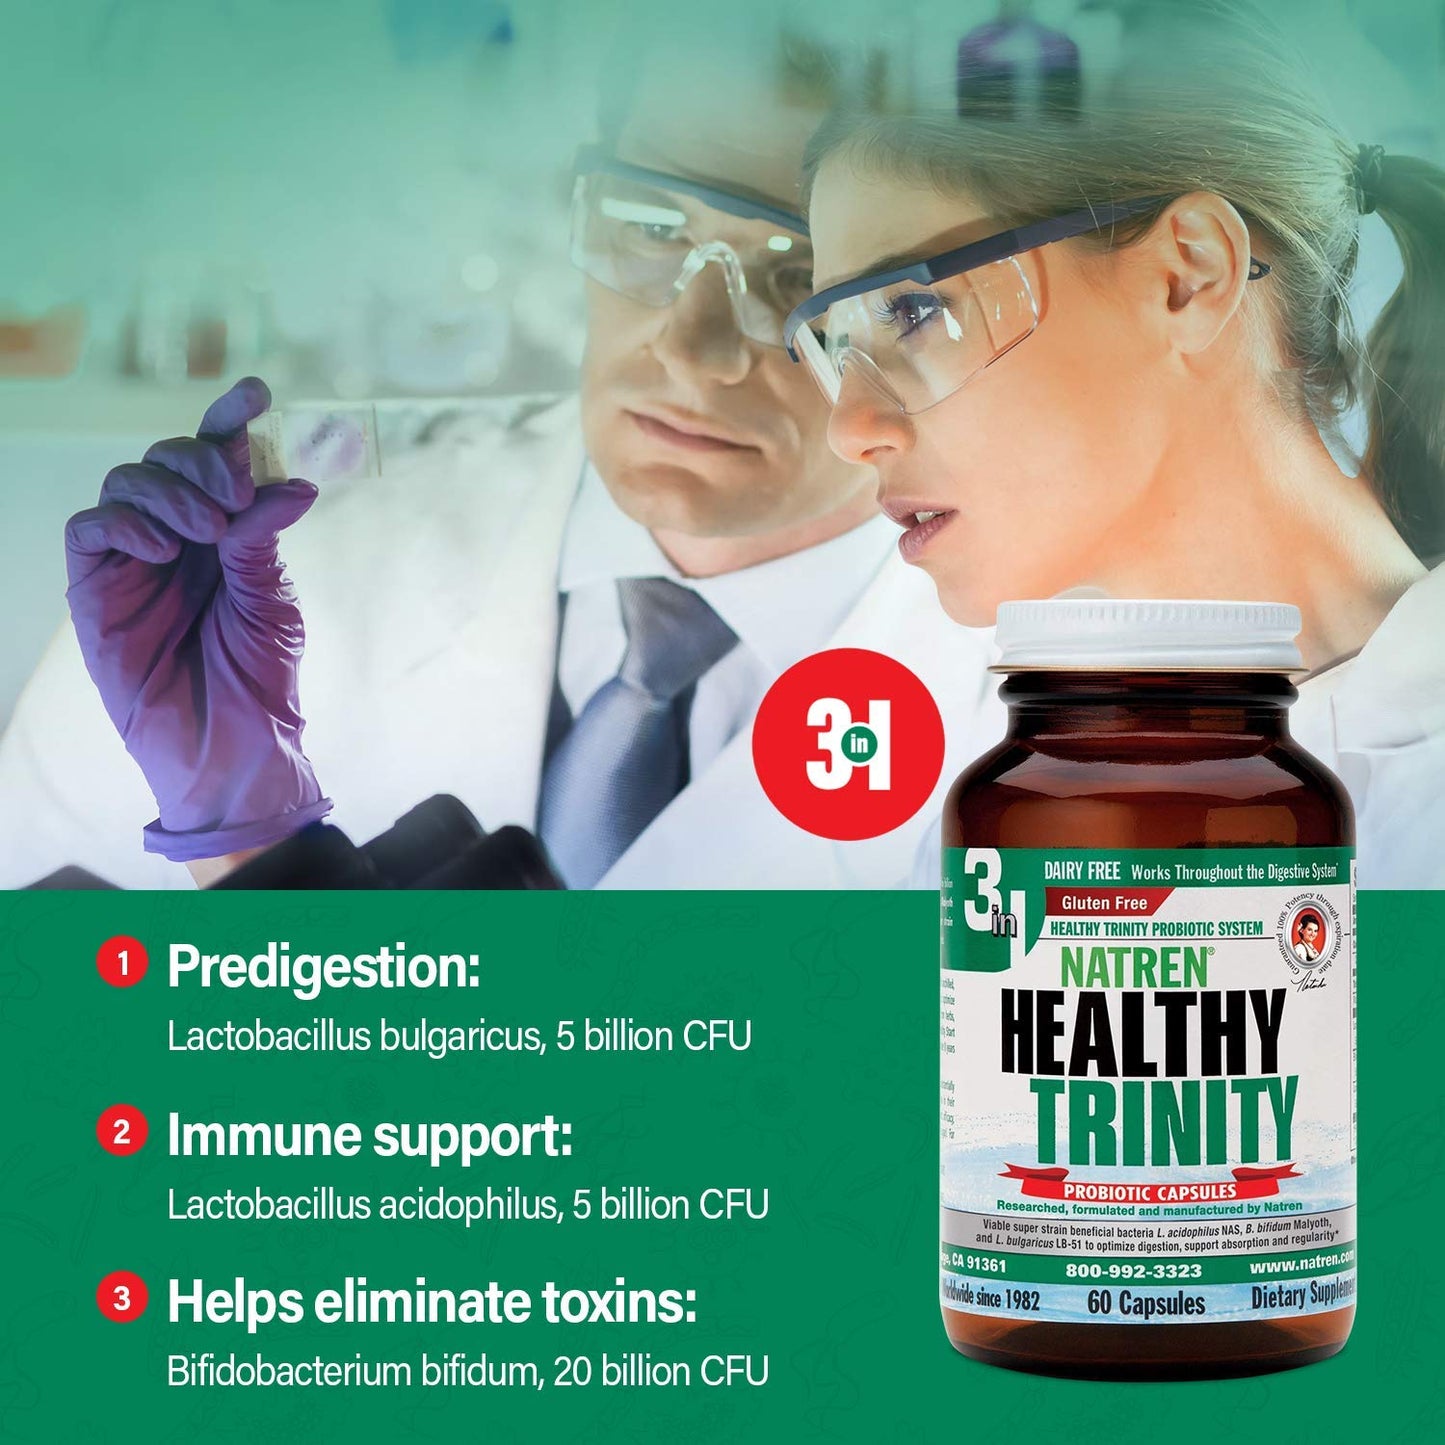 Natren Healthy Trinity Probiotics Supplement - 60 Dairy and Gluten Free Gel Capsules